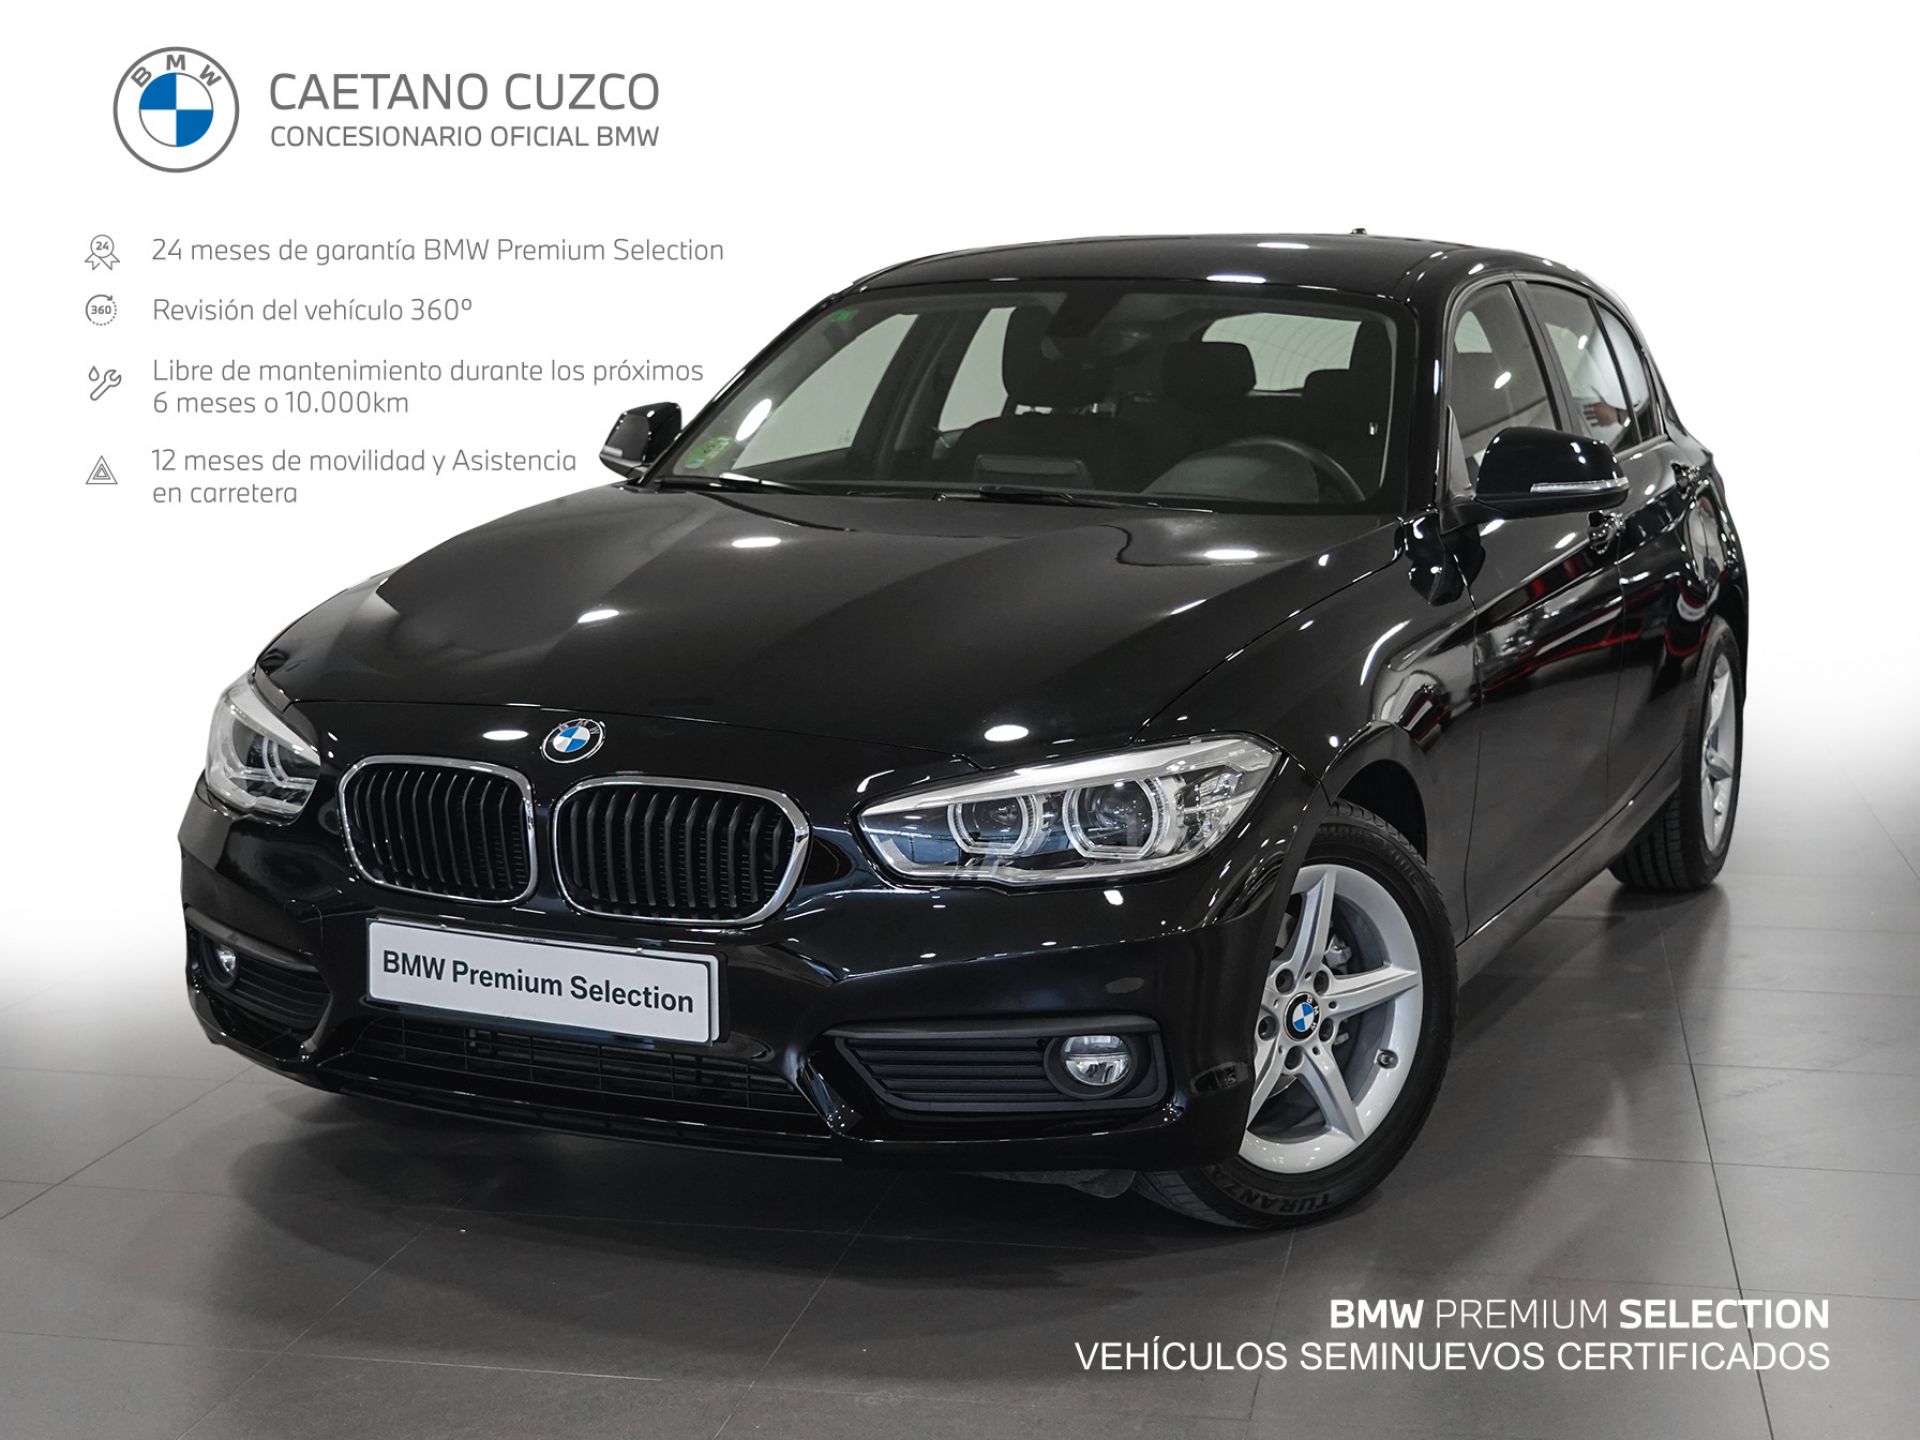 BMW Serie 1 118i 34260 kms Schwarz (sólido) segunda mano Madrid (2713) | Caetano Cuzco